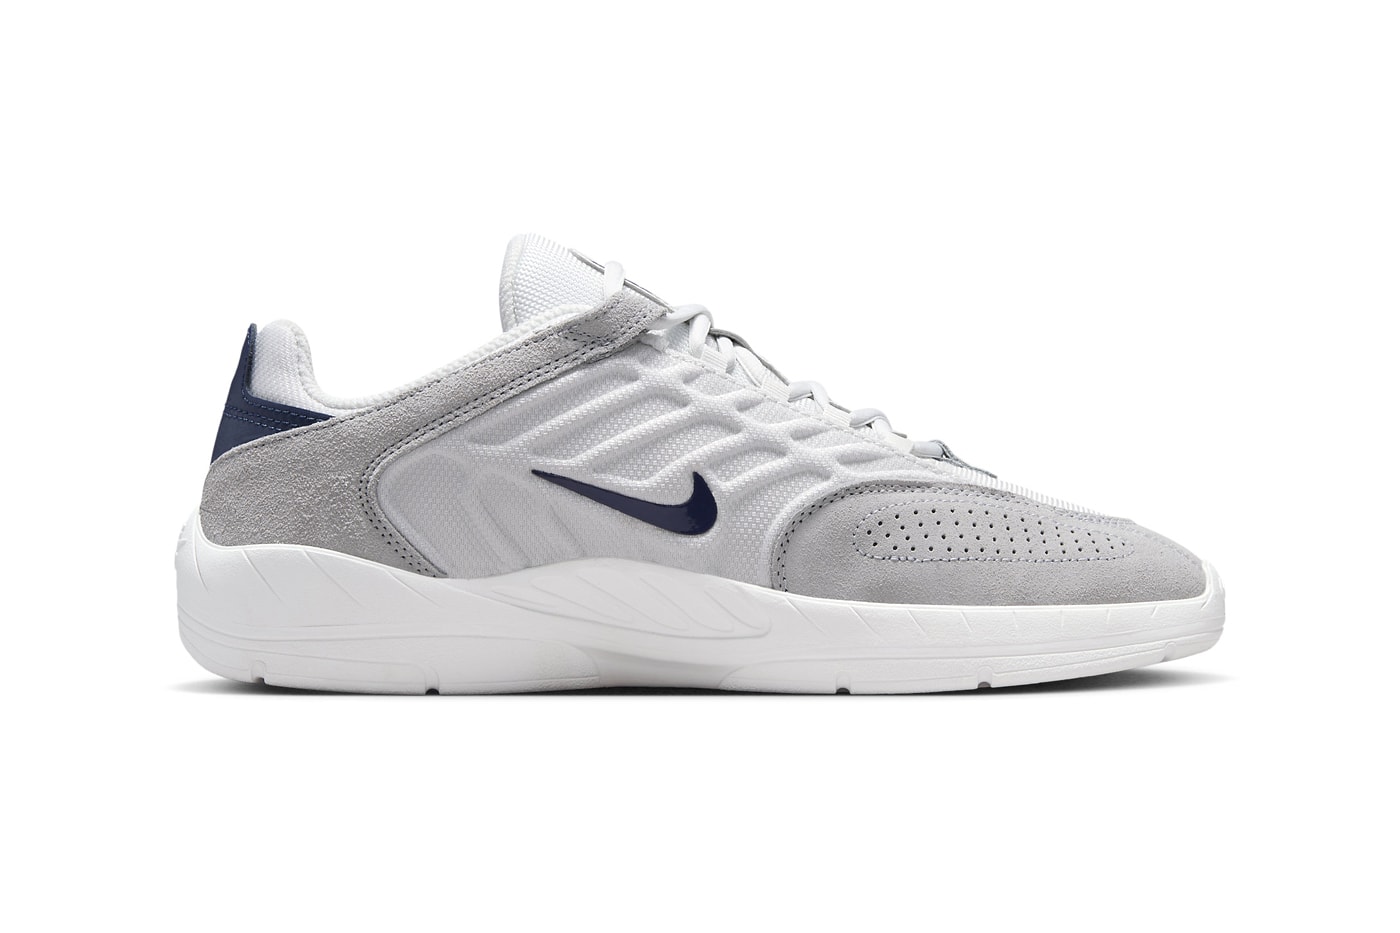 Nike SB Vertebrae Surfaces in a Minimal "Georgetown" Colorway FD4691-002 Release all white grey suede mesh